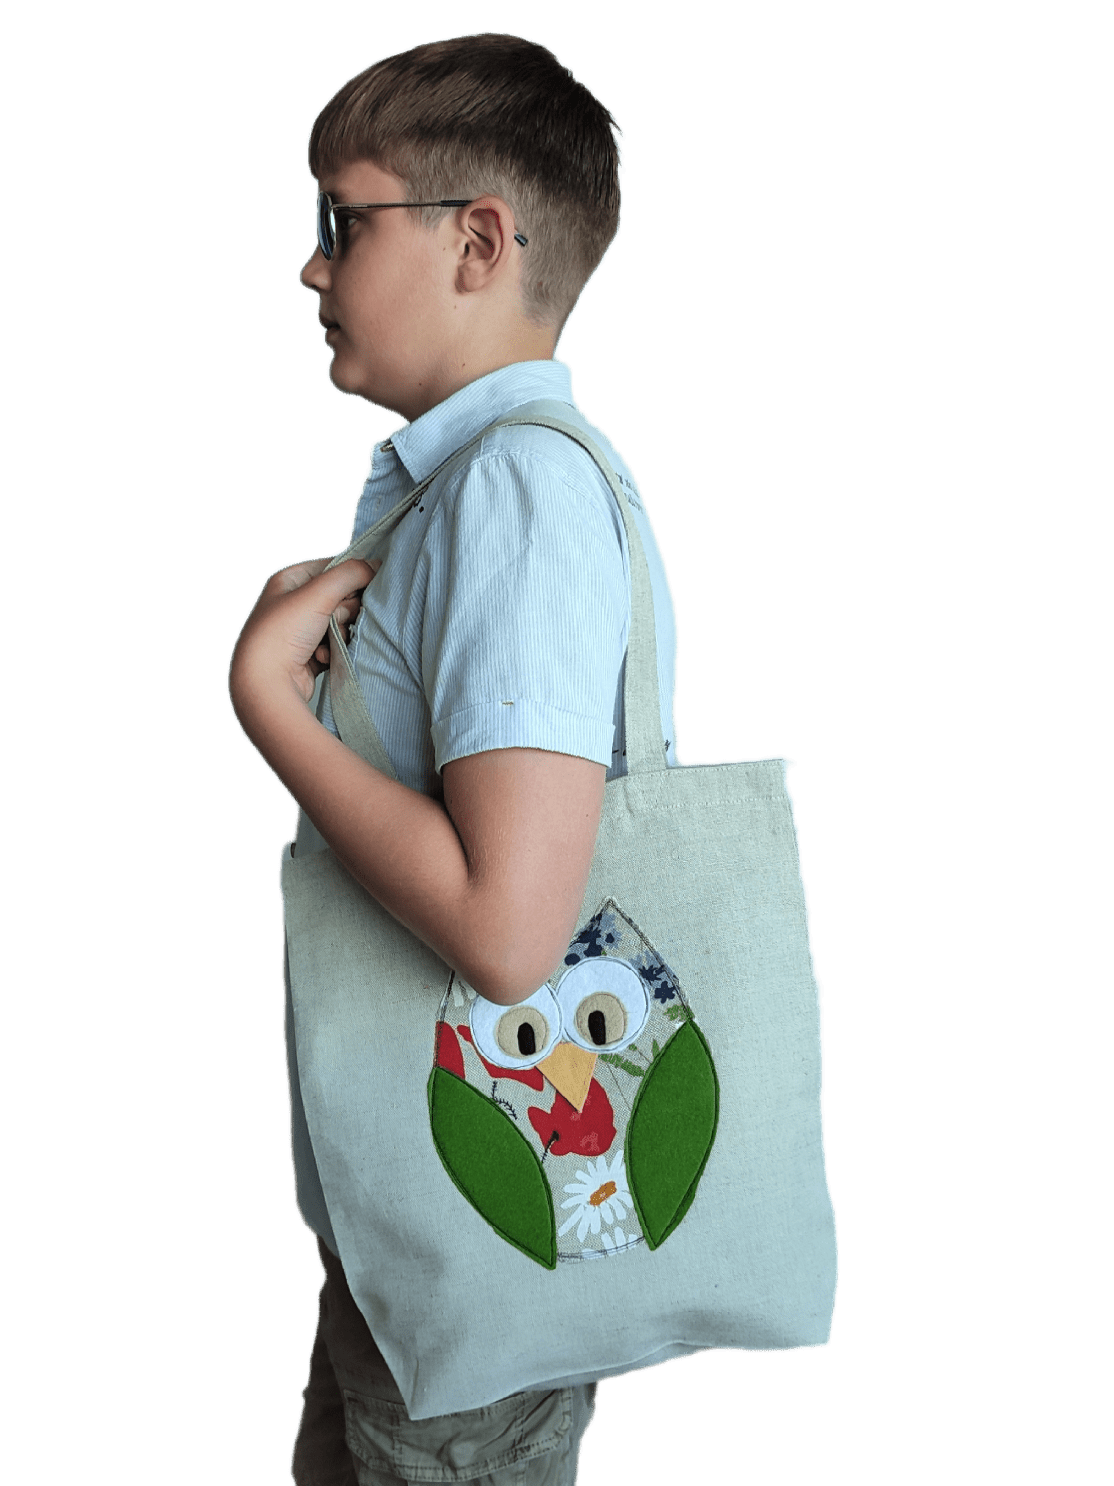 Shopping bag OWL - Linen4me